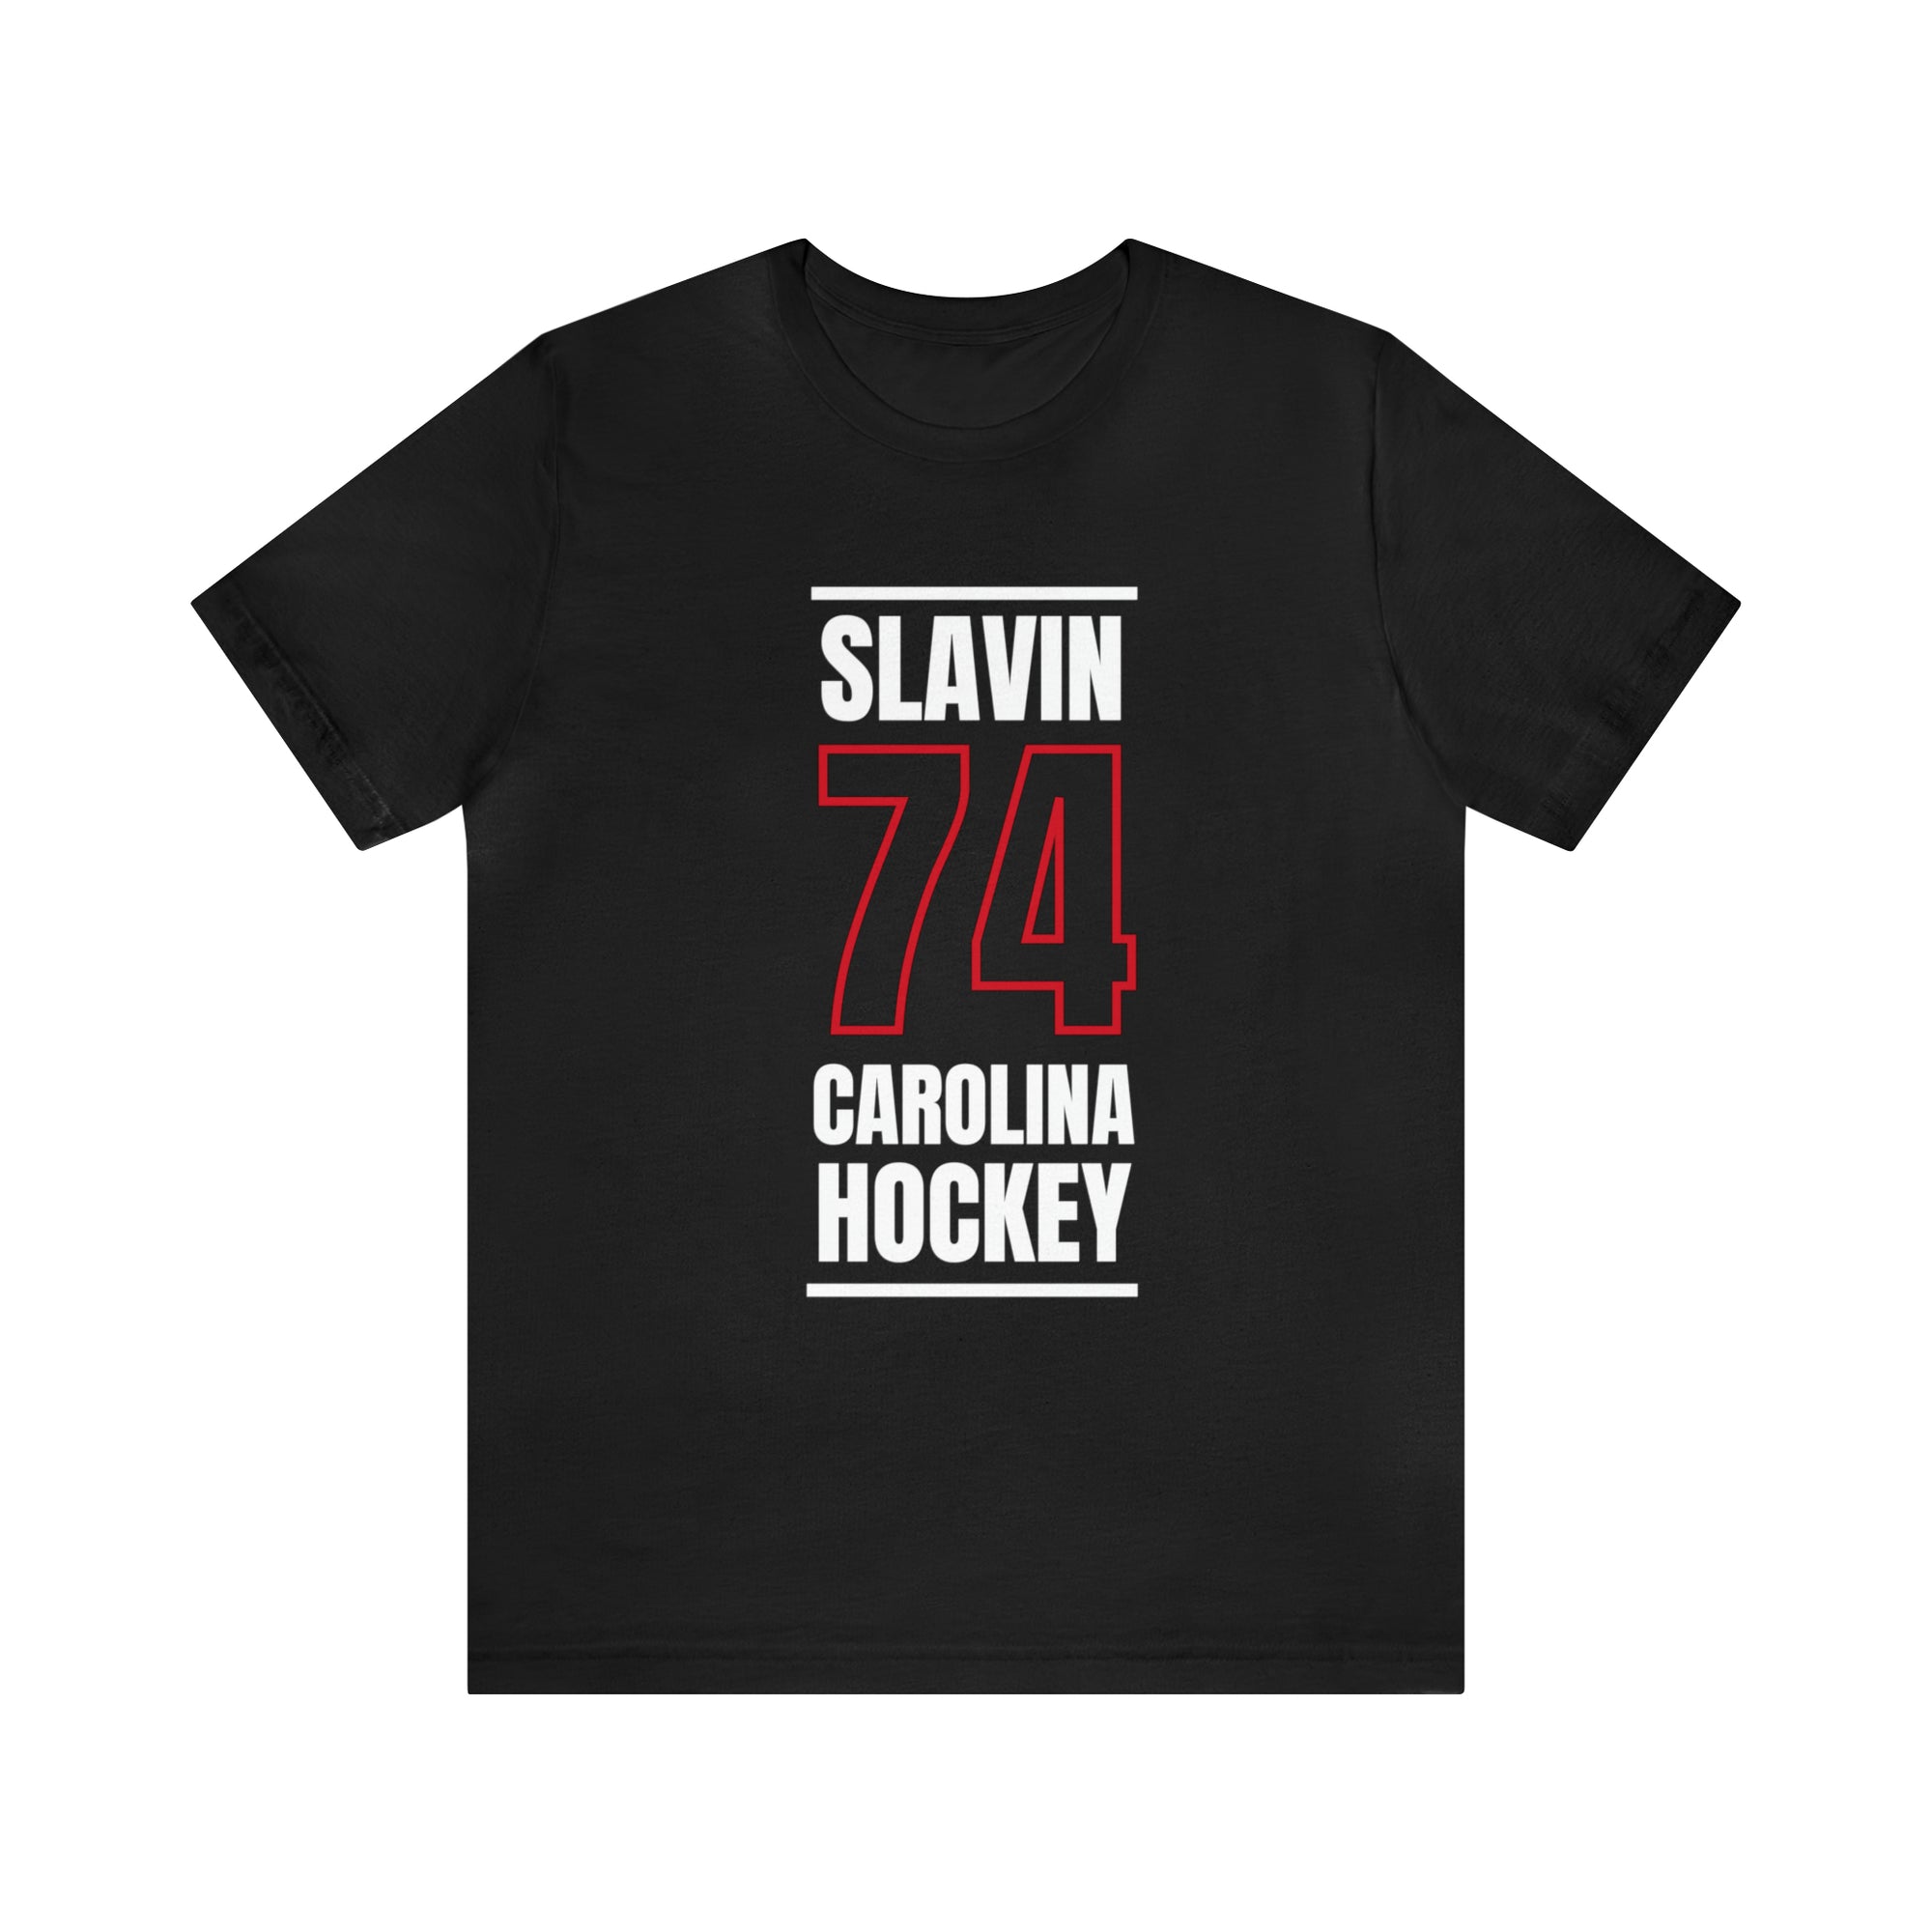 Slavin 74 Carolina Hockey Black Vertical Design Unisex T-Shirt